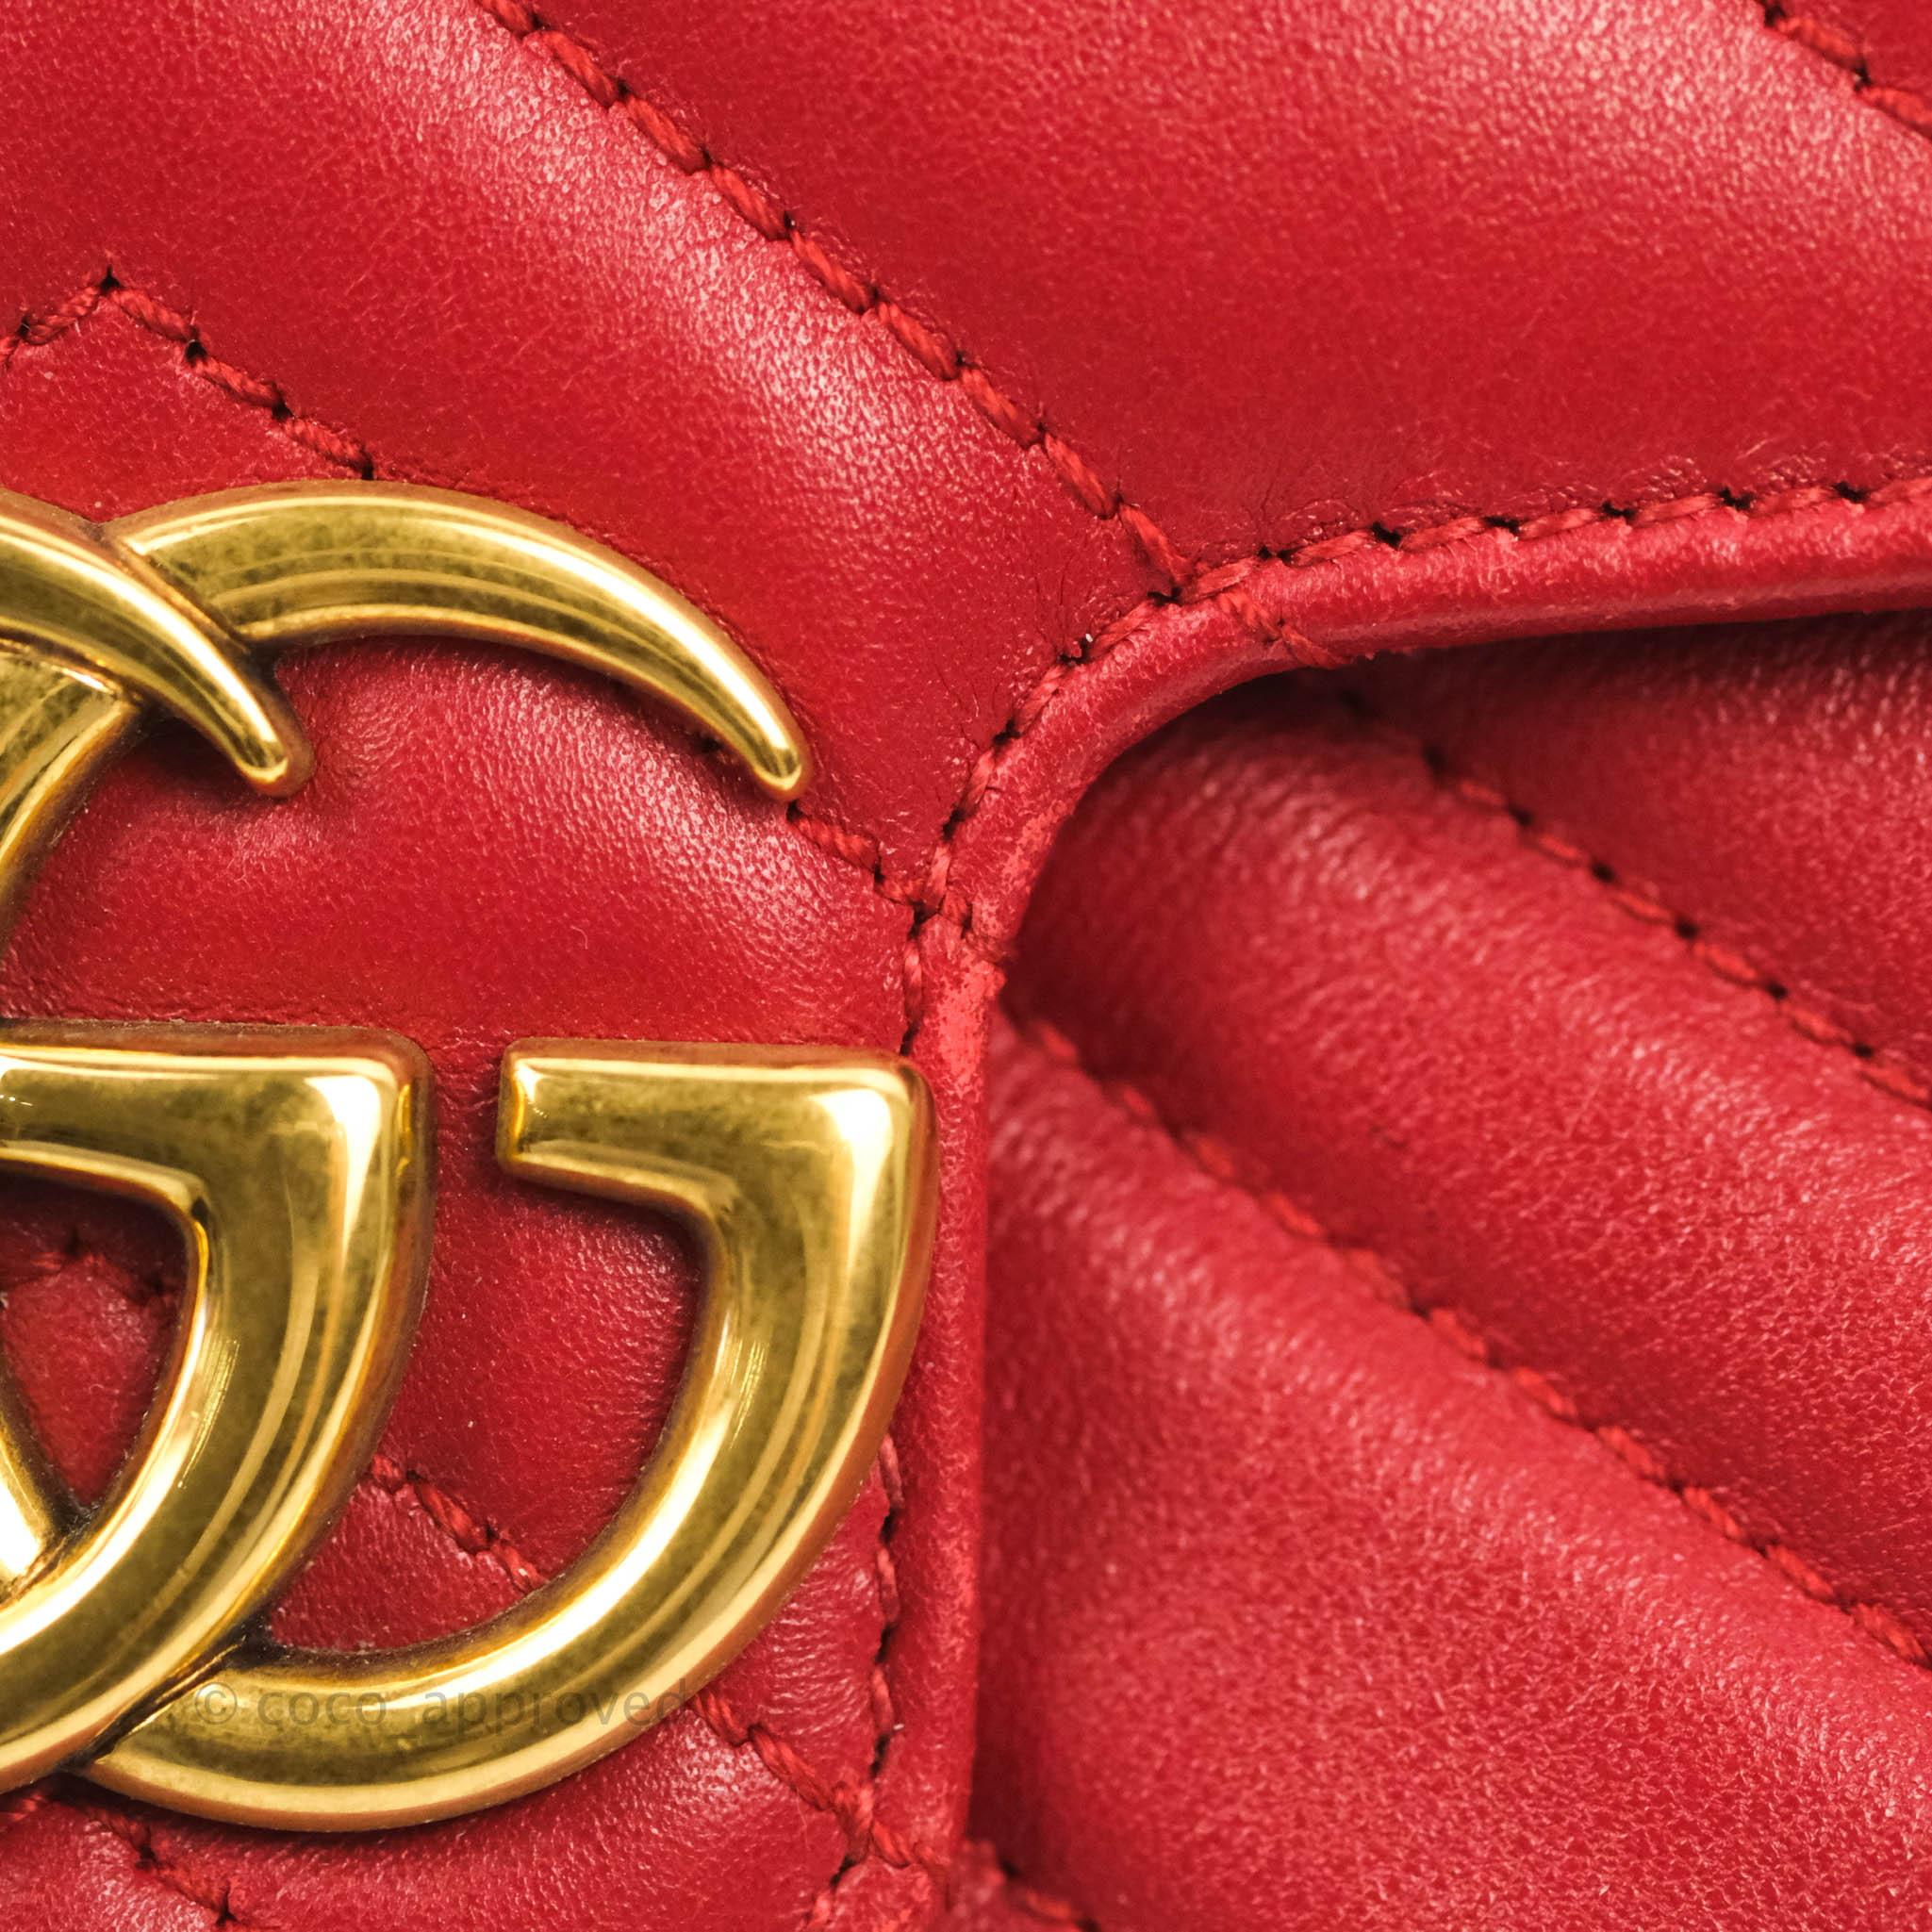 Gucci Small Red Matelassé GG Marmont Bag